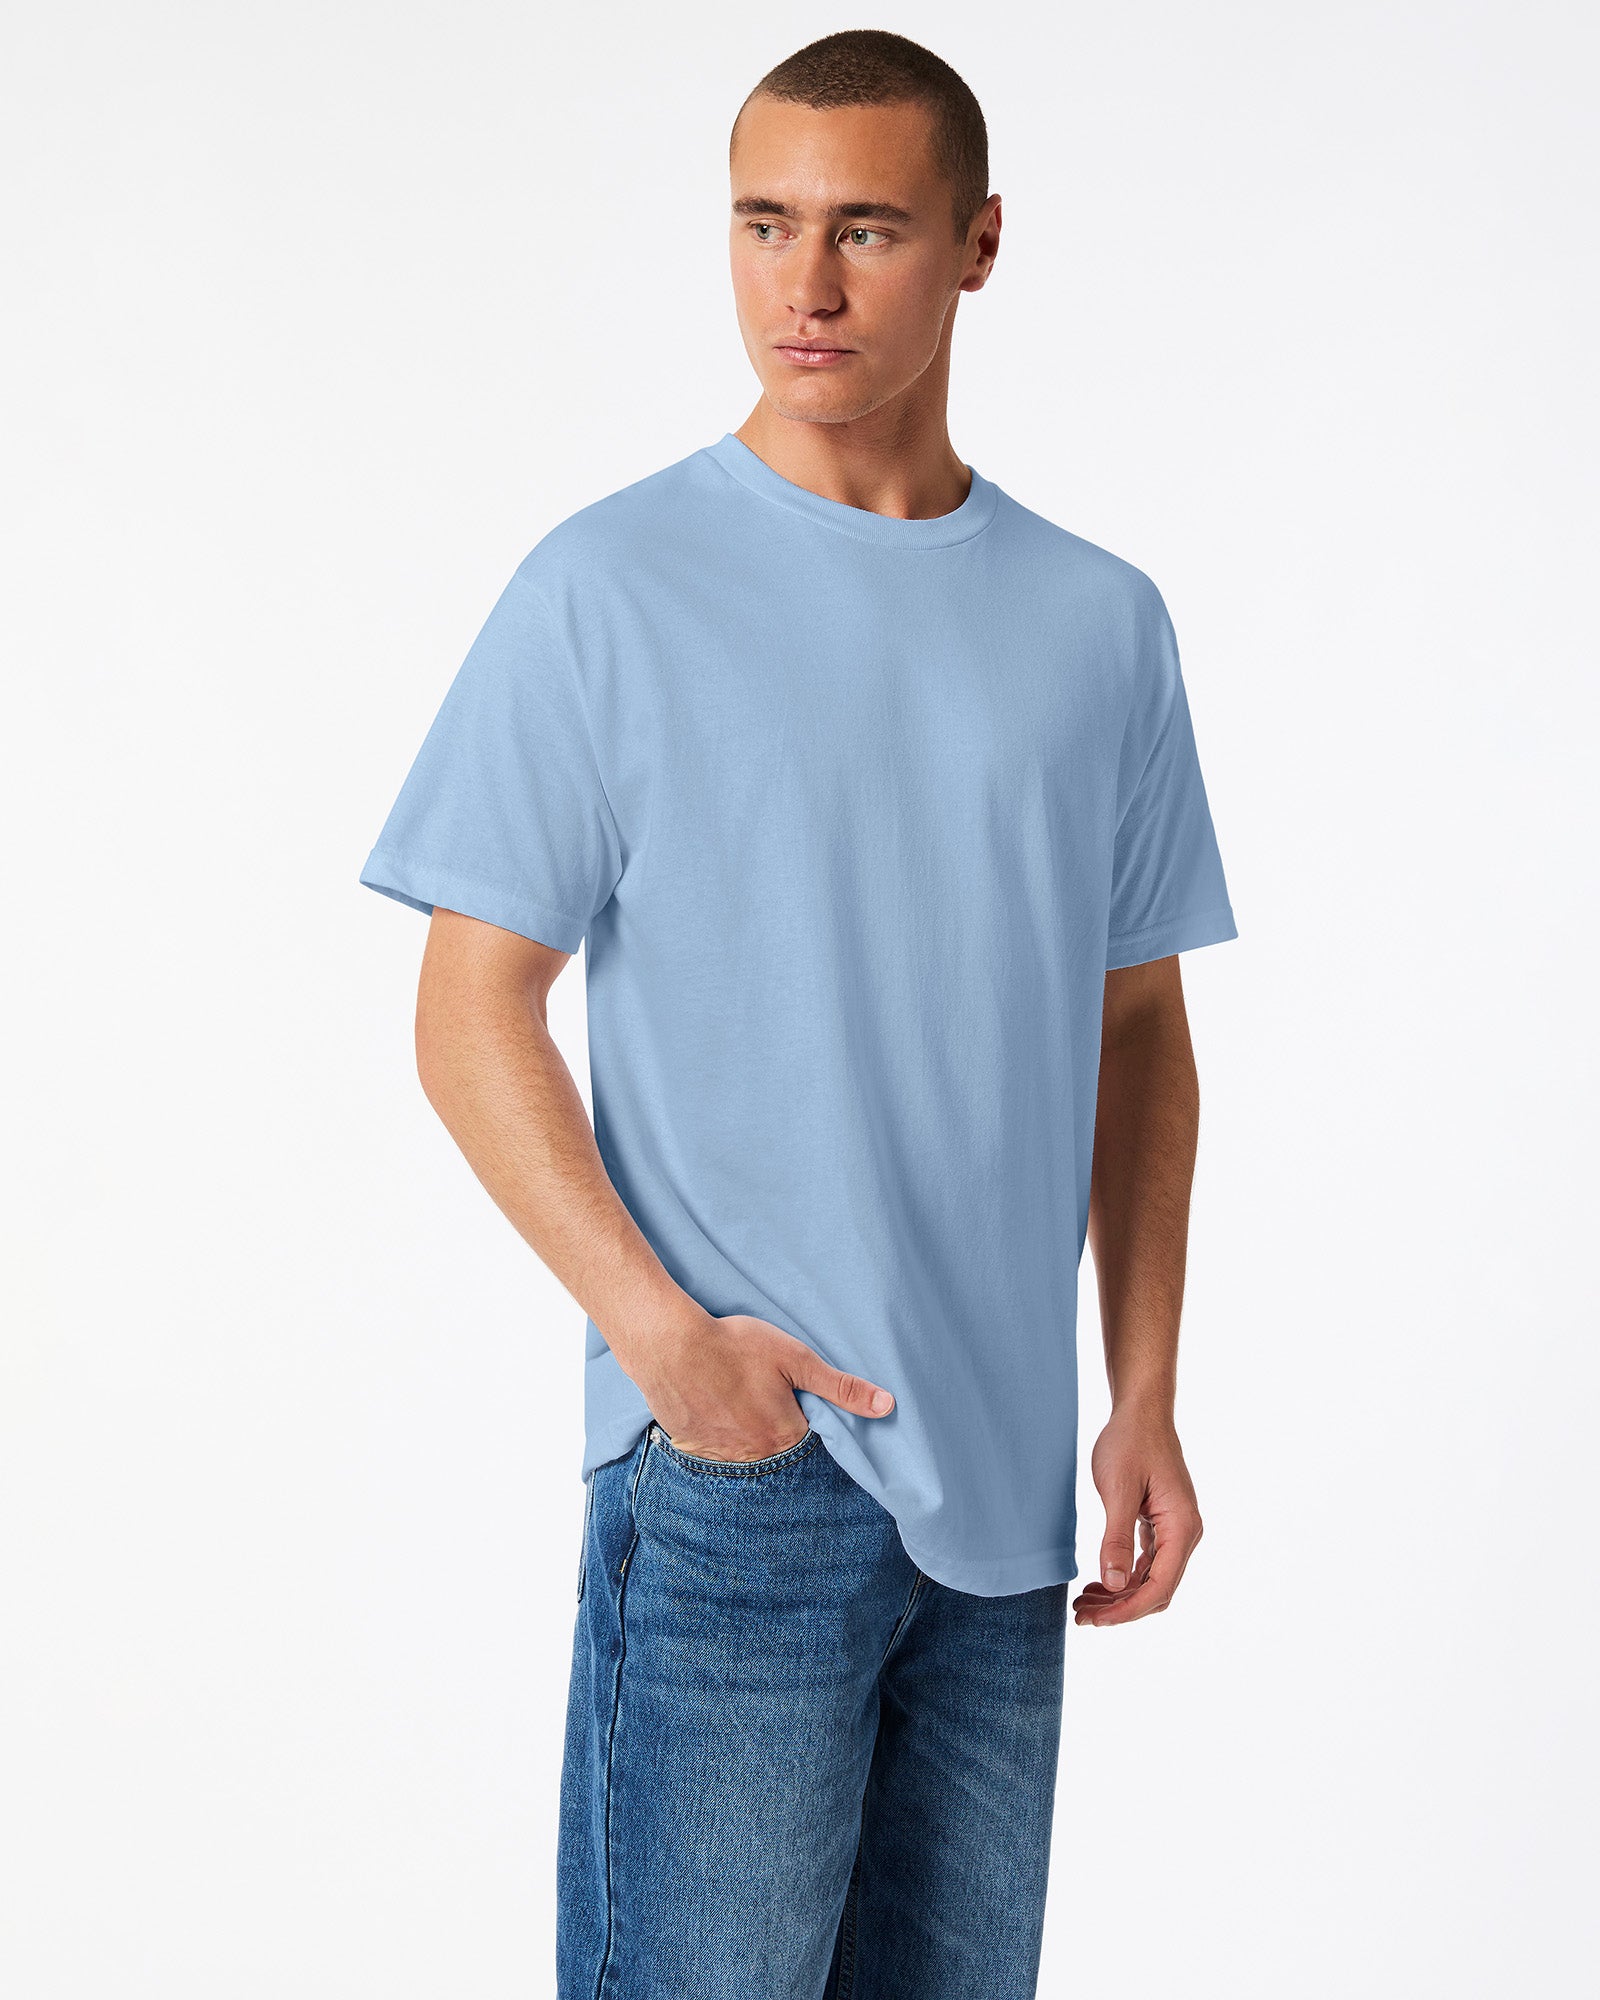 Heavyweight Unisex T-Shirt - Powder Blue